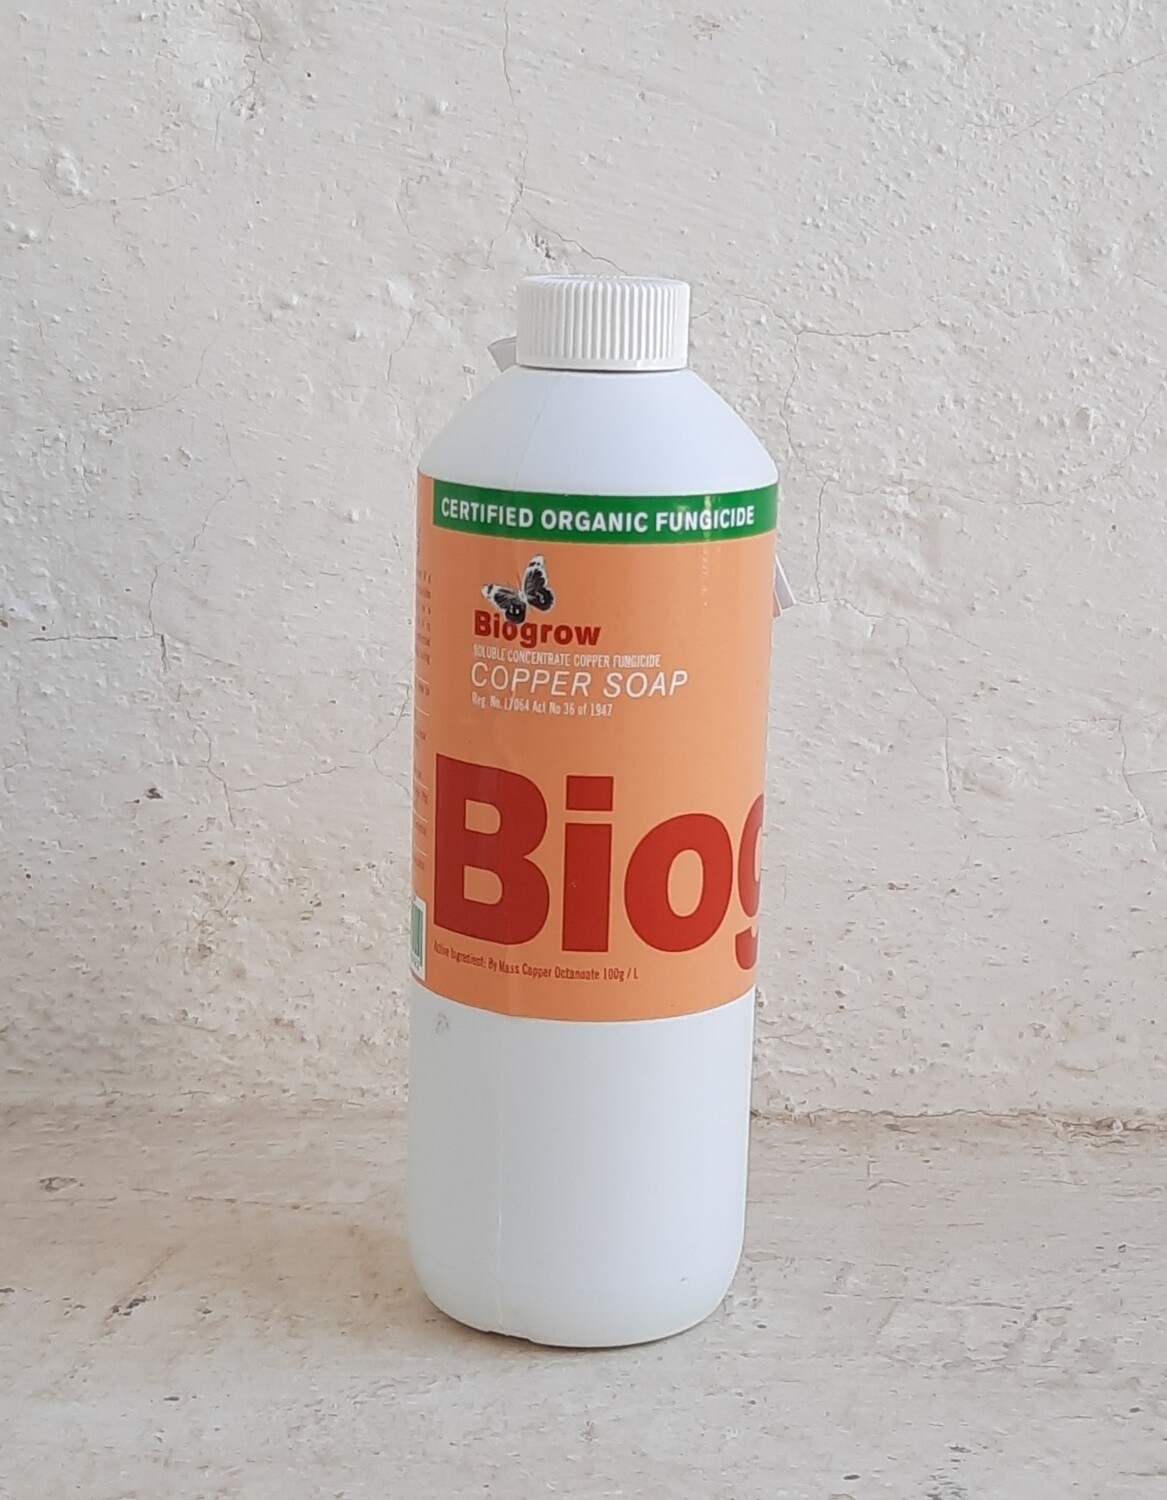 Biogrow Copper Soap Organic Fungicide 500ml